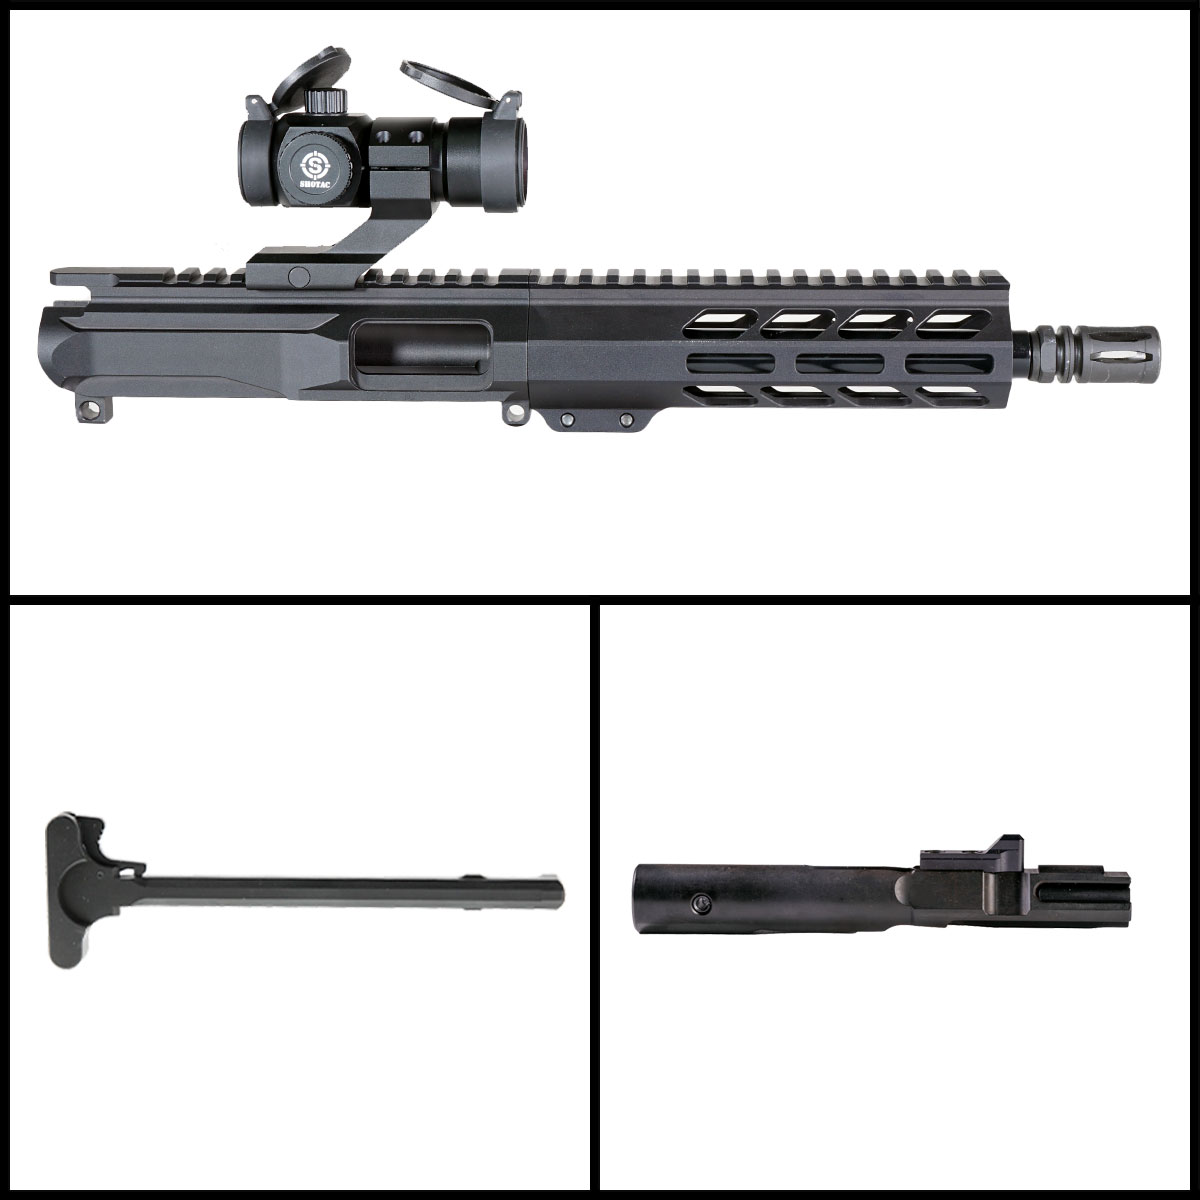 MMC 'Eternal Night Gen 2 w/ Shotac Cantilever' 8.5-inch AR-15 9mm Nitride Pistol Complete Upper Build Kit